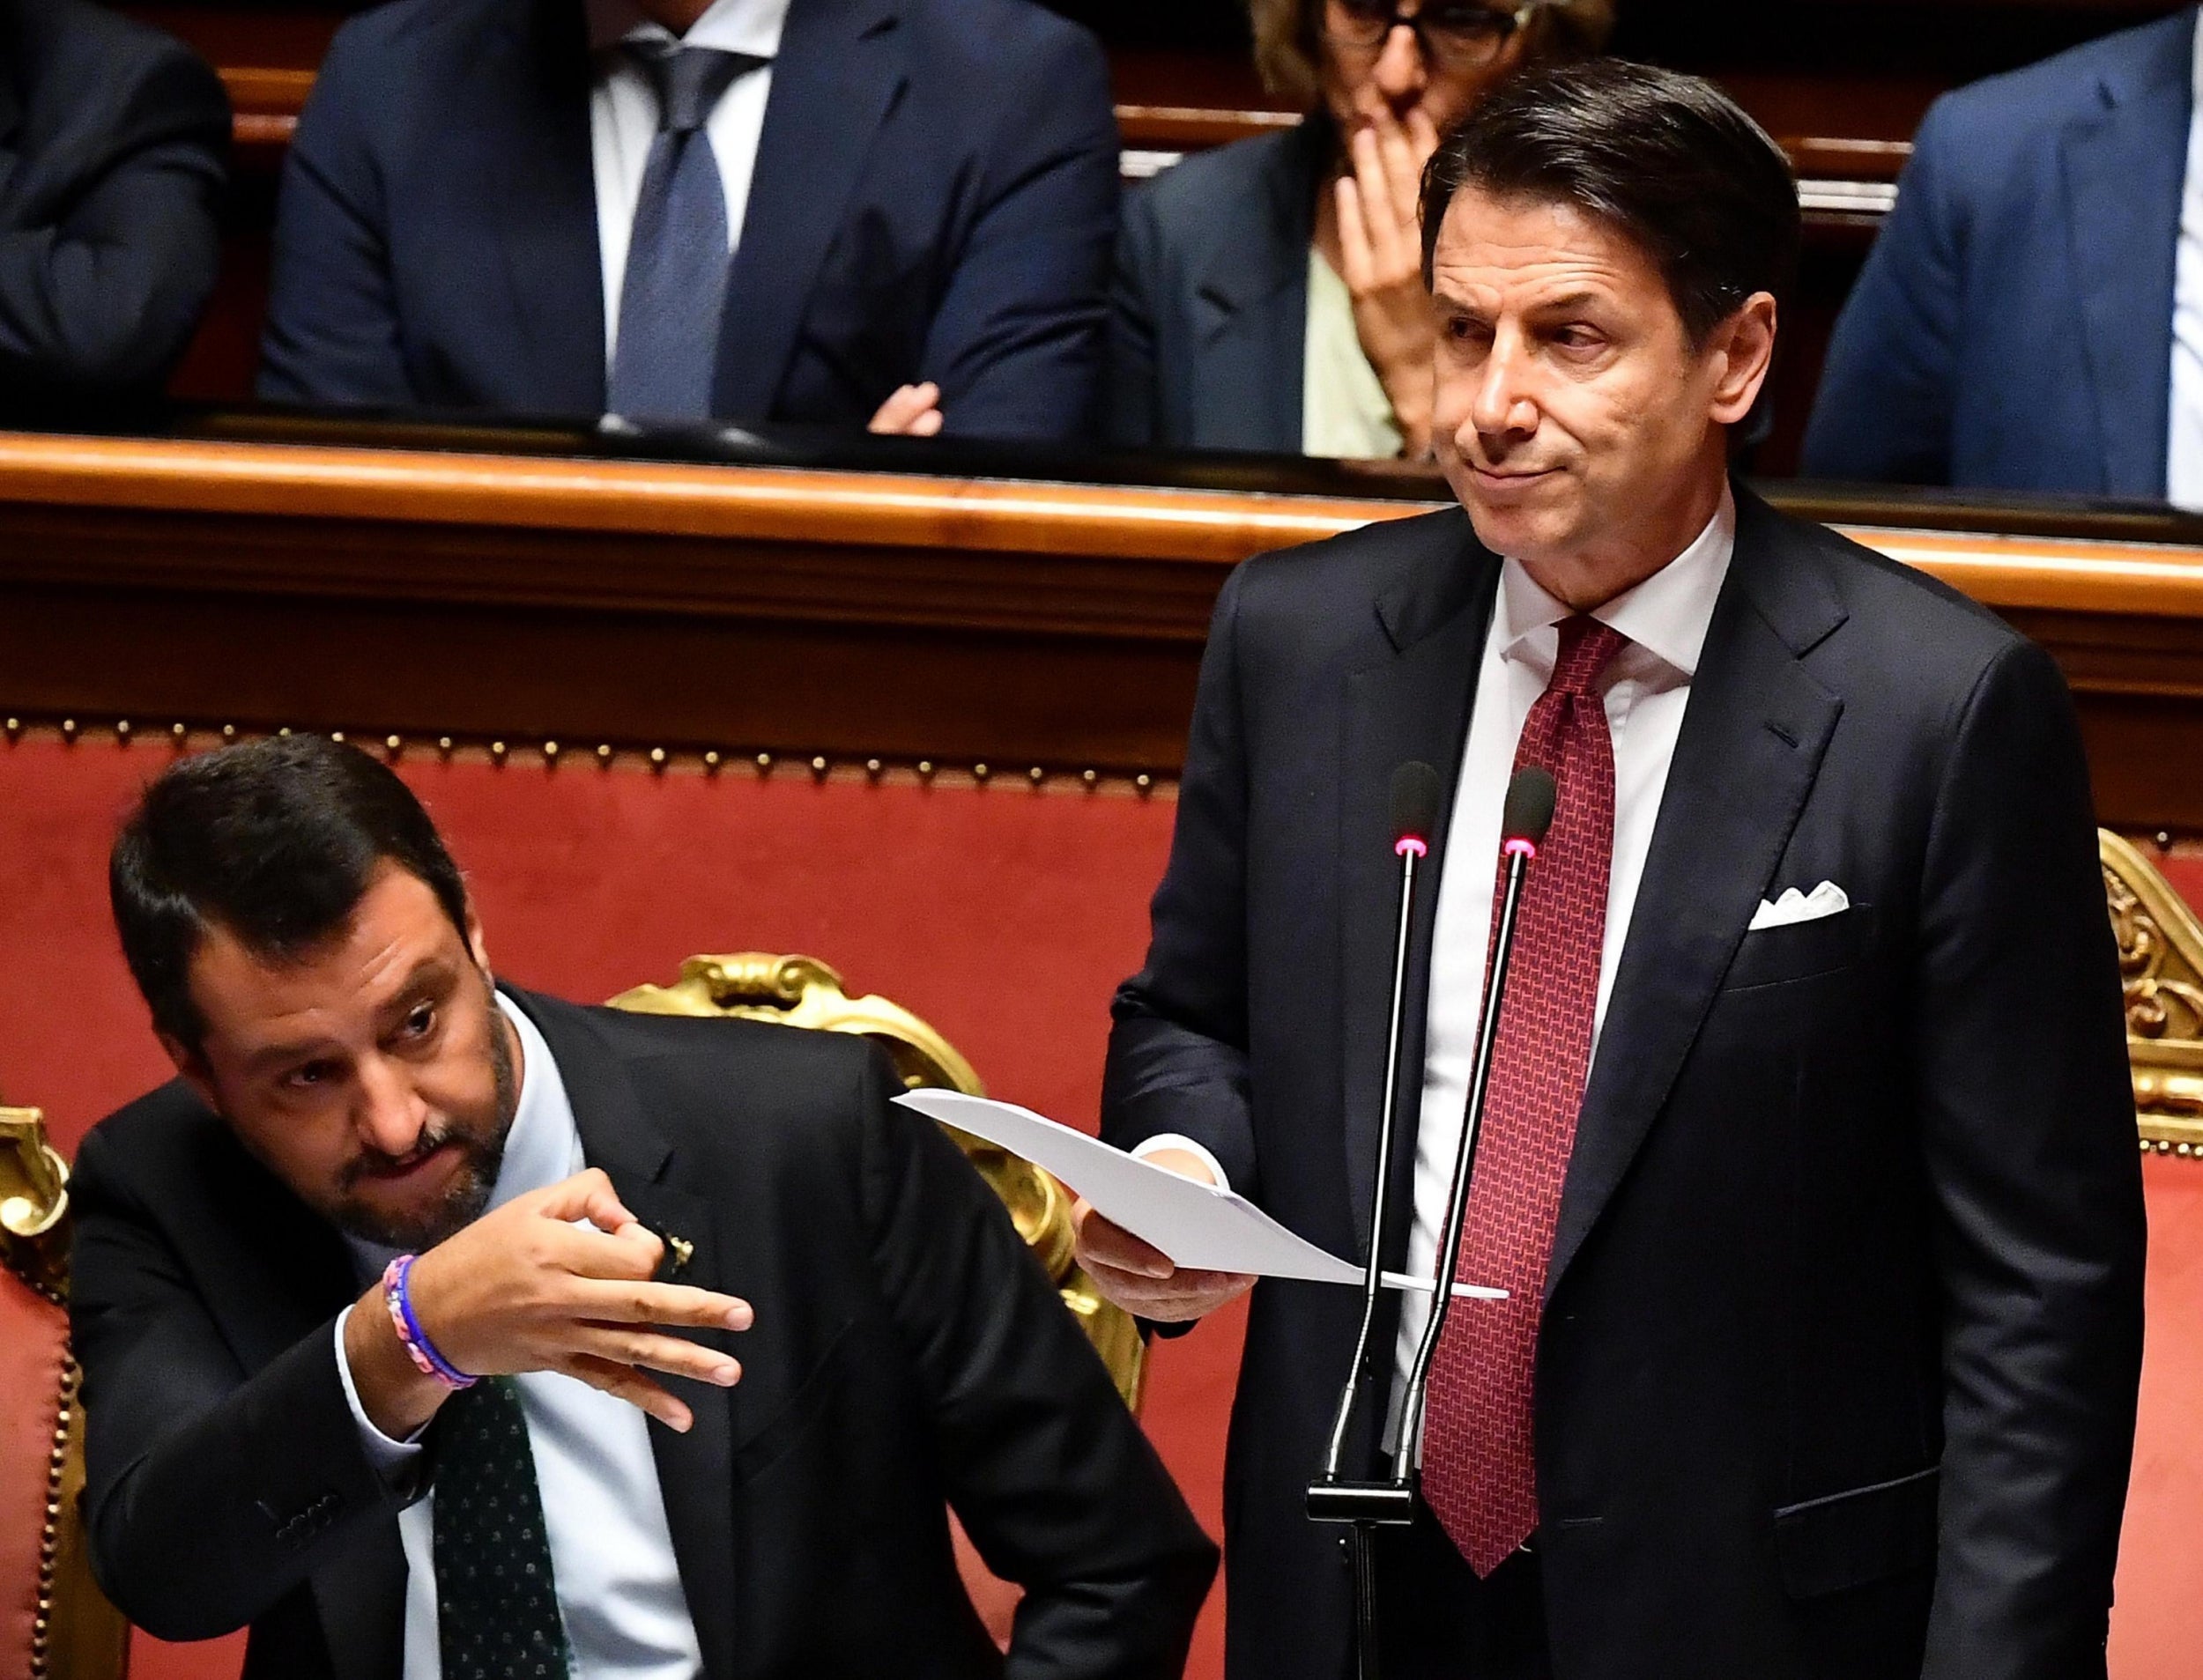 Italian prime minister Giuseppe Conte (right) flanked by League leader Matteo Salvini in the Italian senate